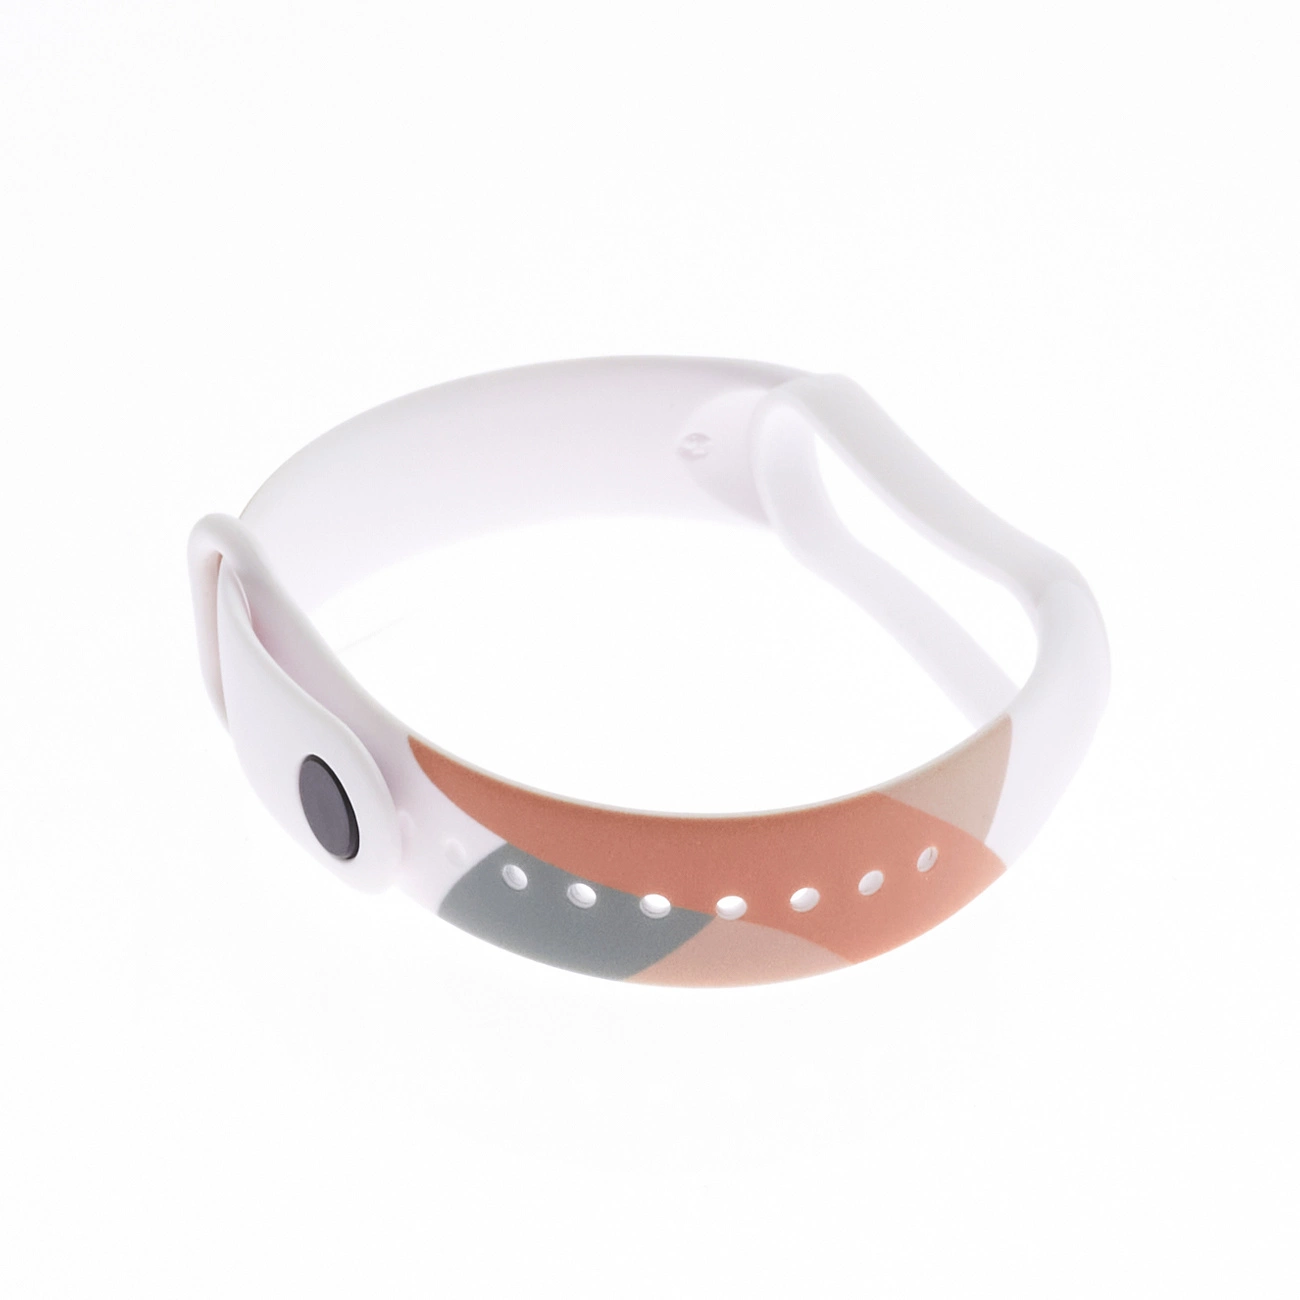 Hurtel Řemínek Moro armband pro Xiaomi Mi Band 4 / Mi Band 3 silikonový řemínek náramek hodinek vzor 3